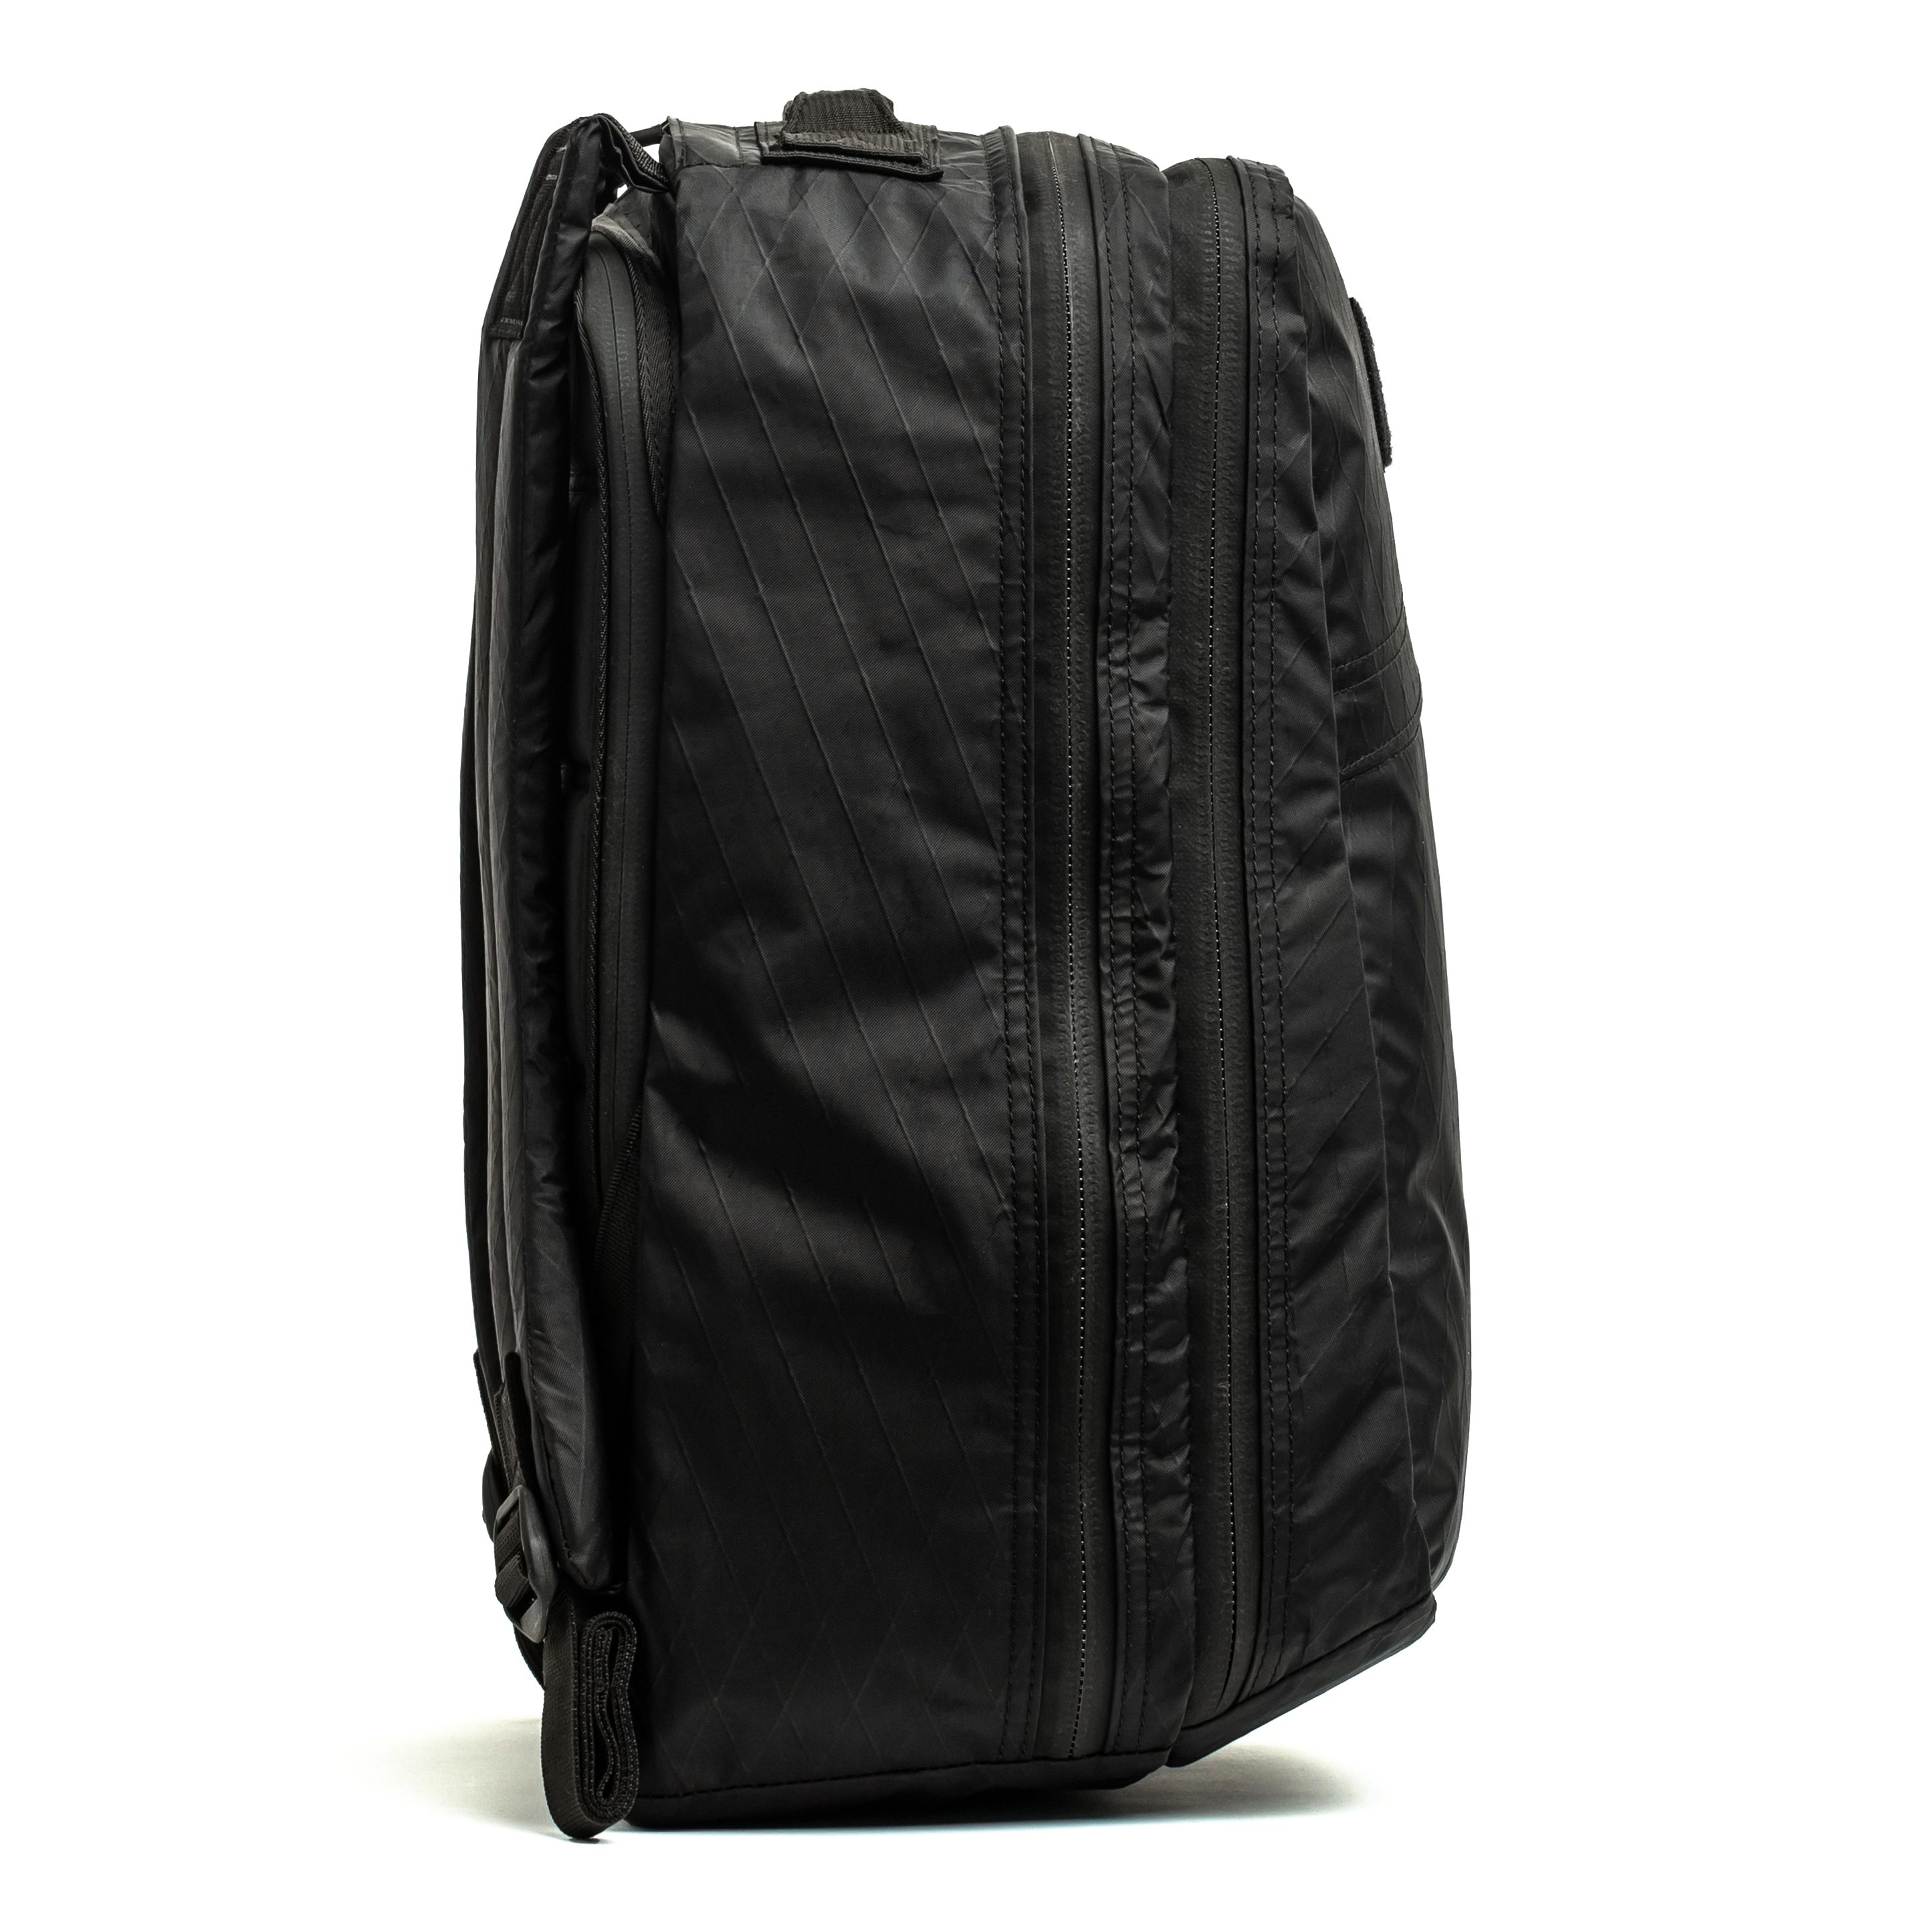 GORUCK GR2 XPAC Backpack - 26L - Black / Green | Backpacks | Huckberry